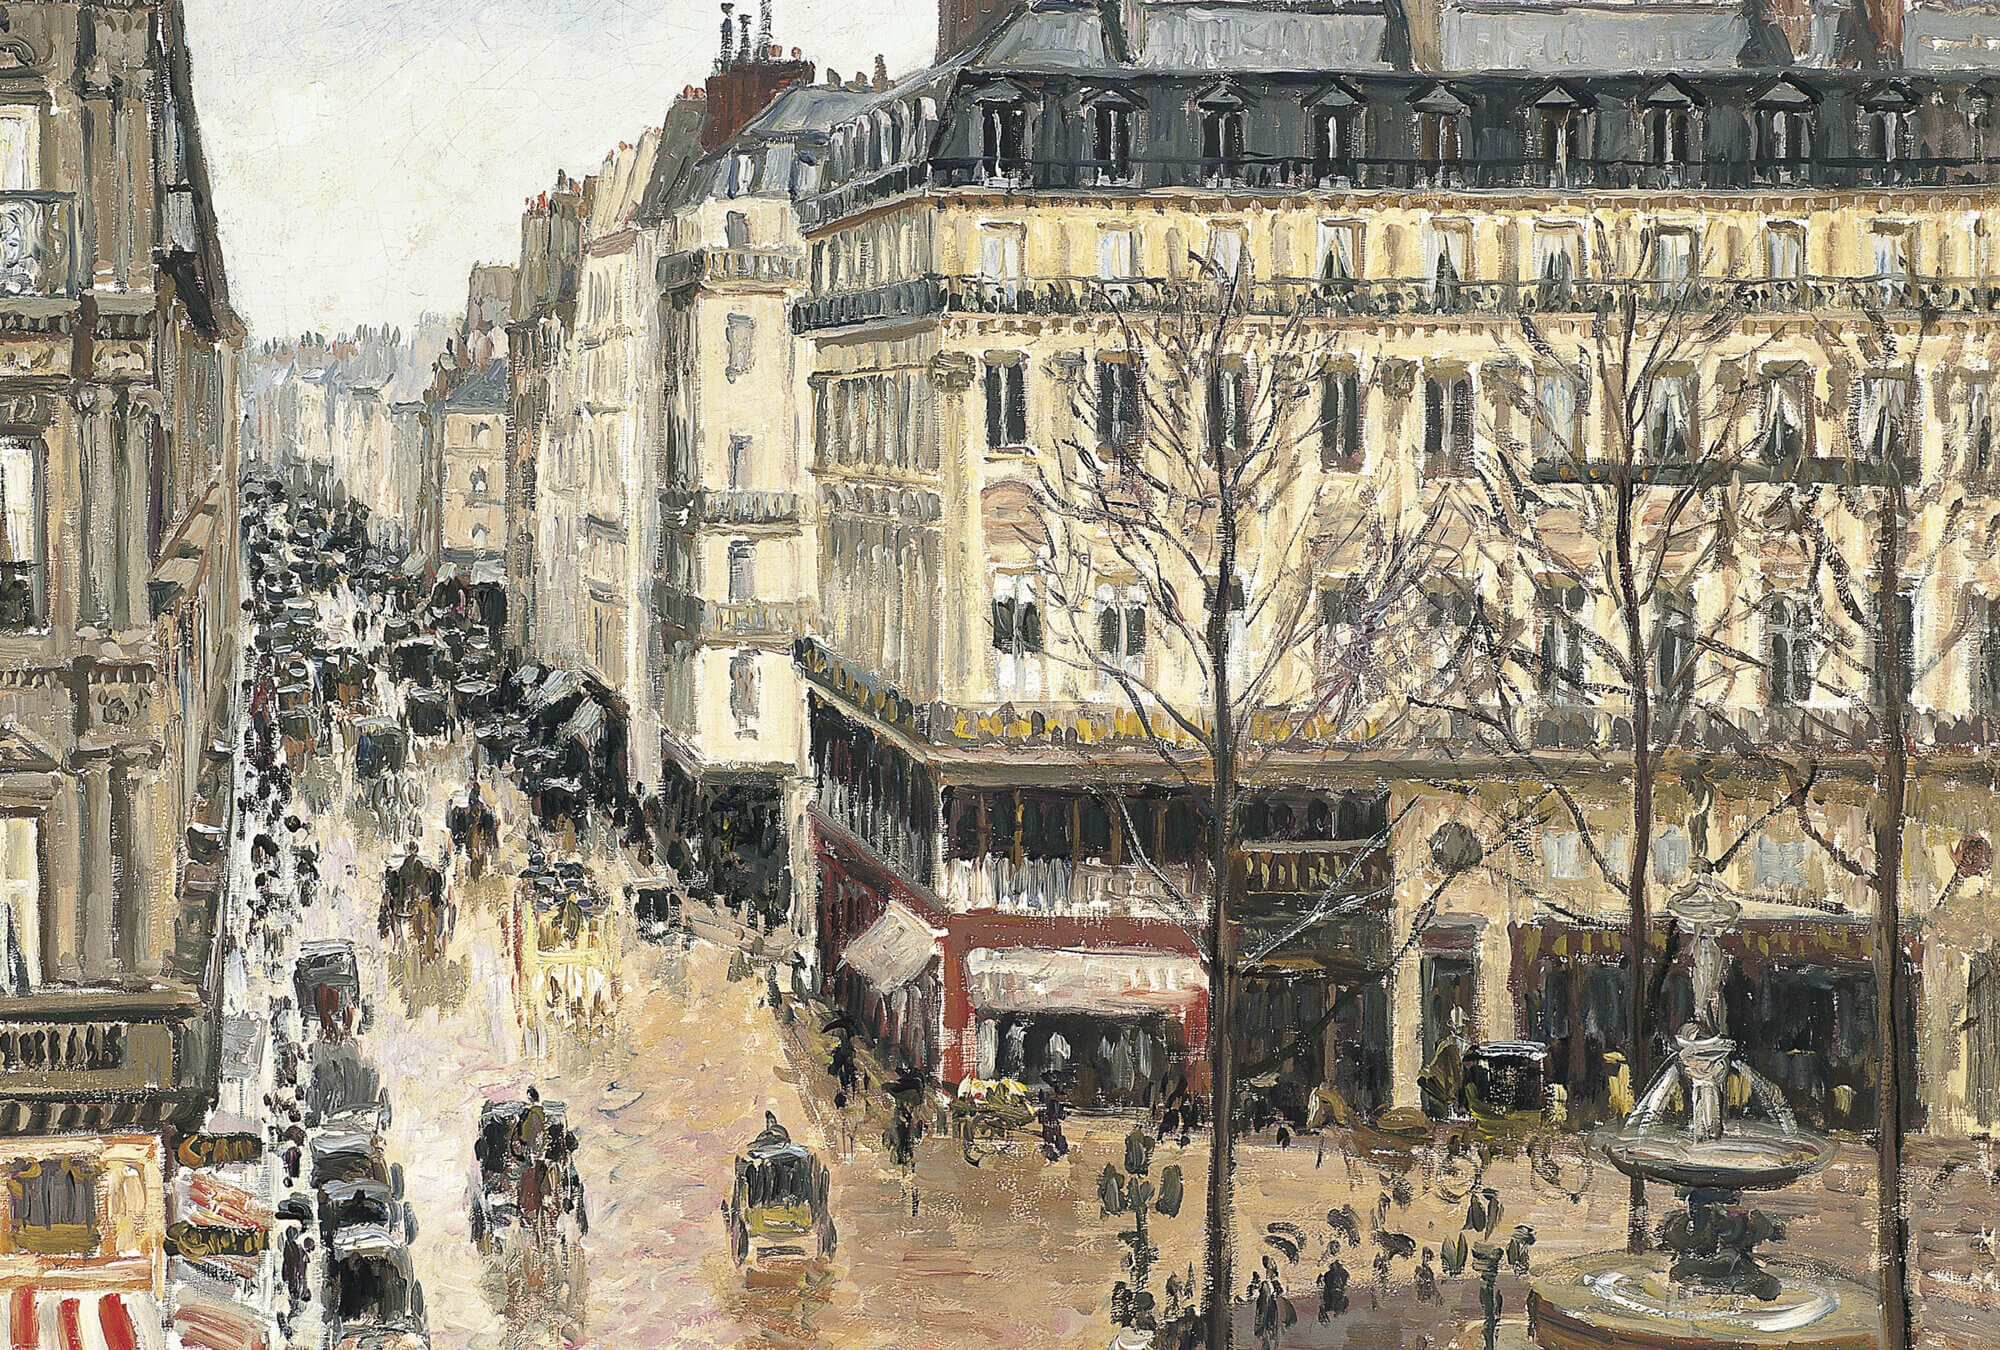 Grand avenues in modern Paris glistening during an afternoon rain.